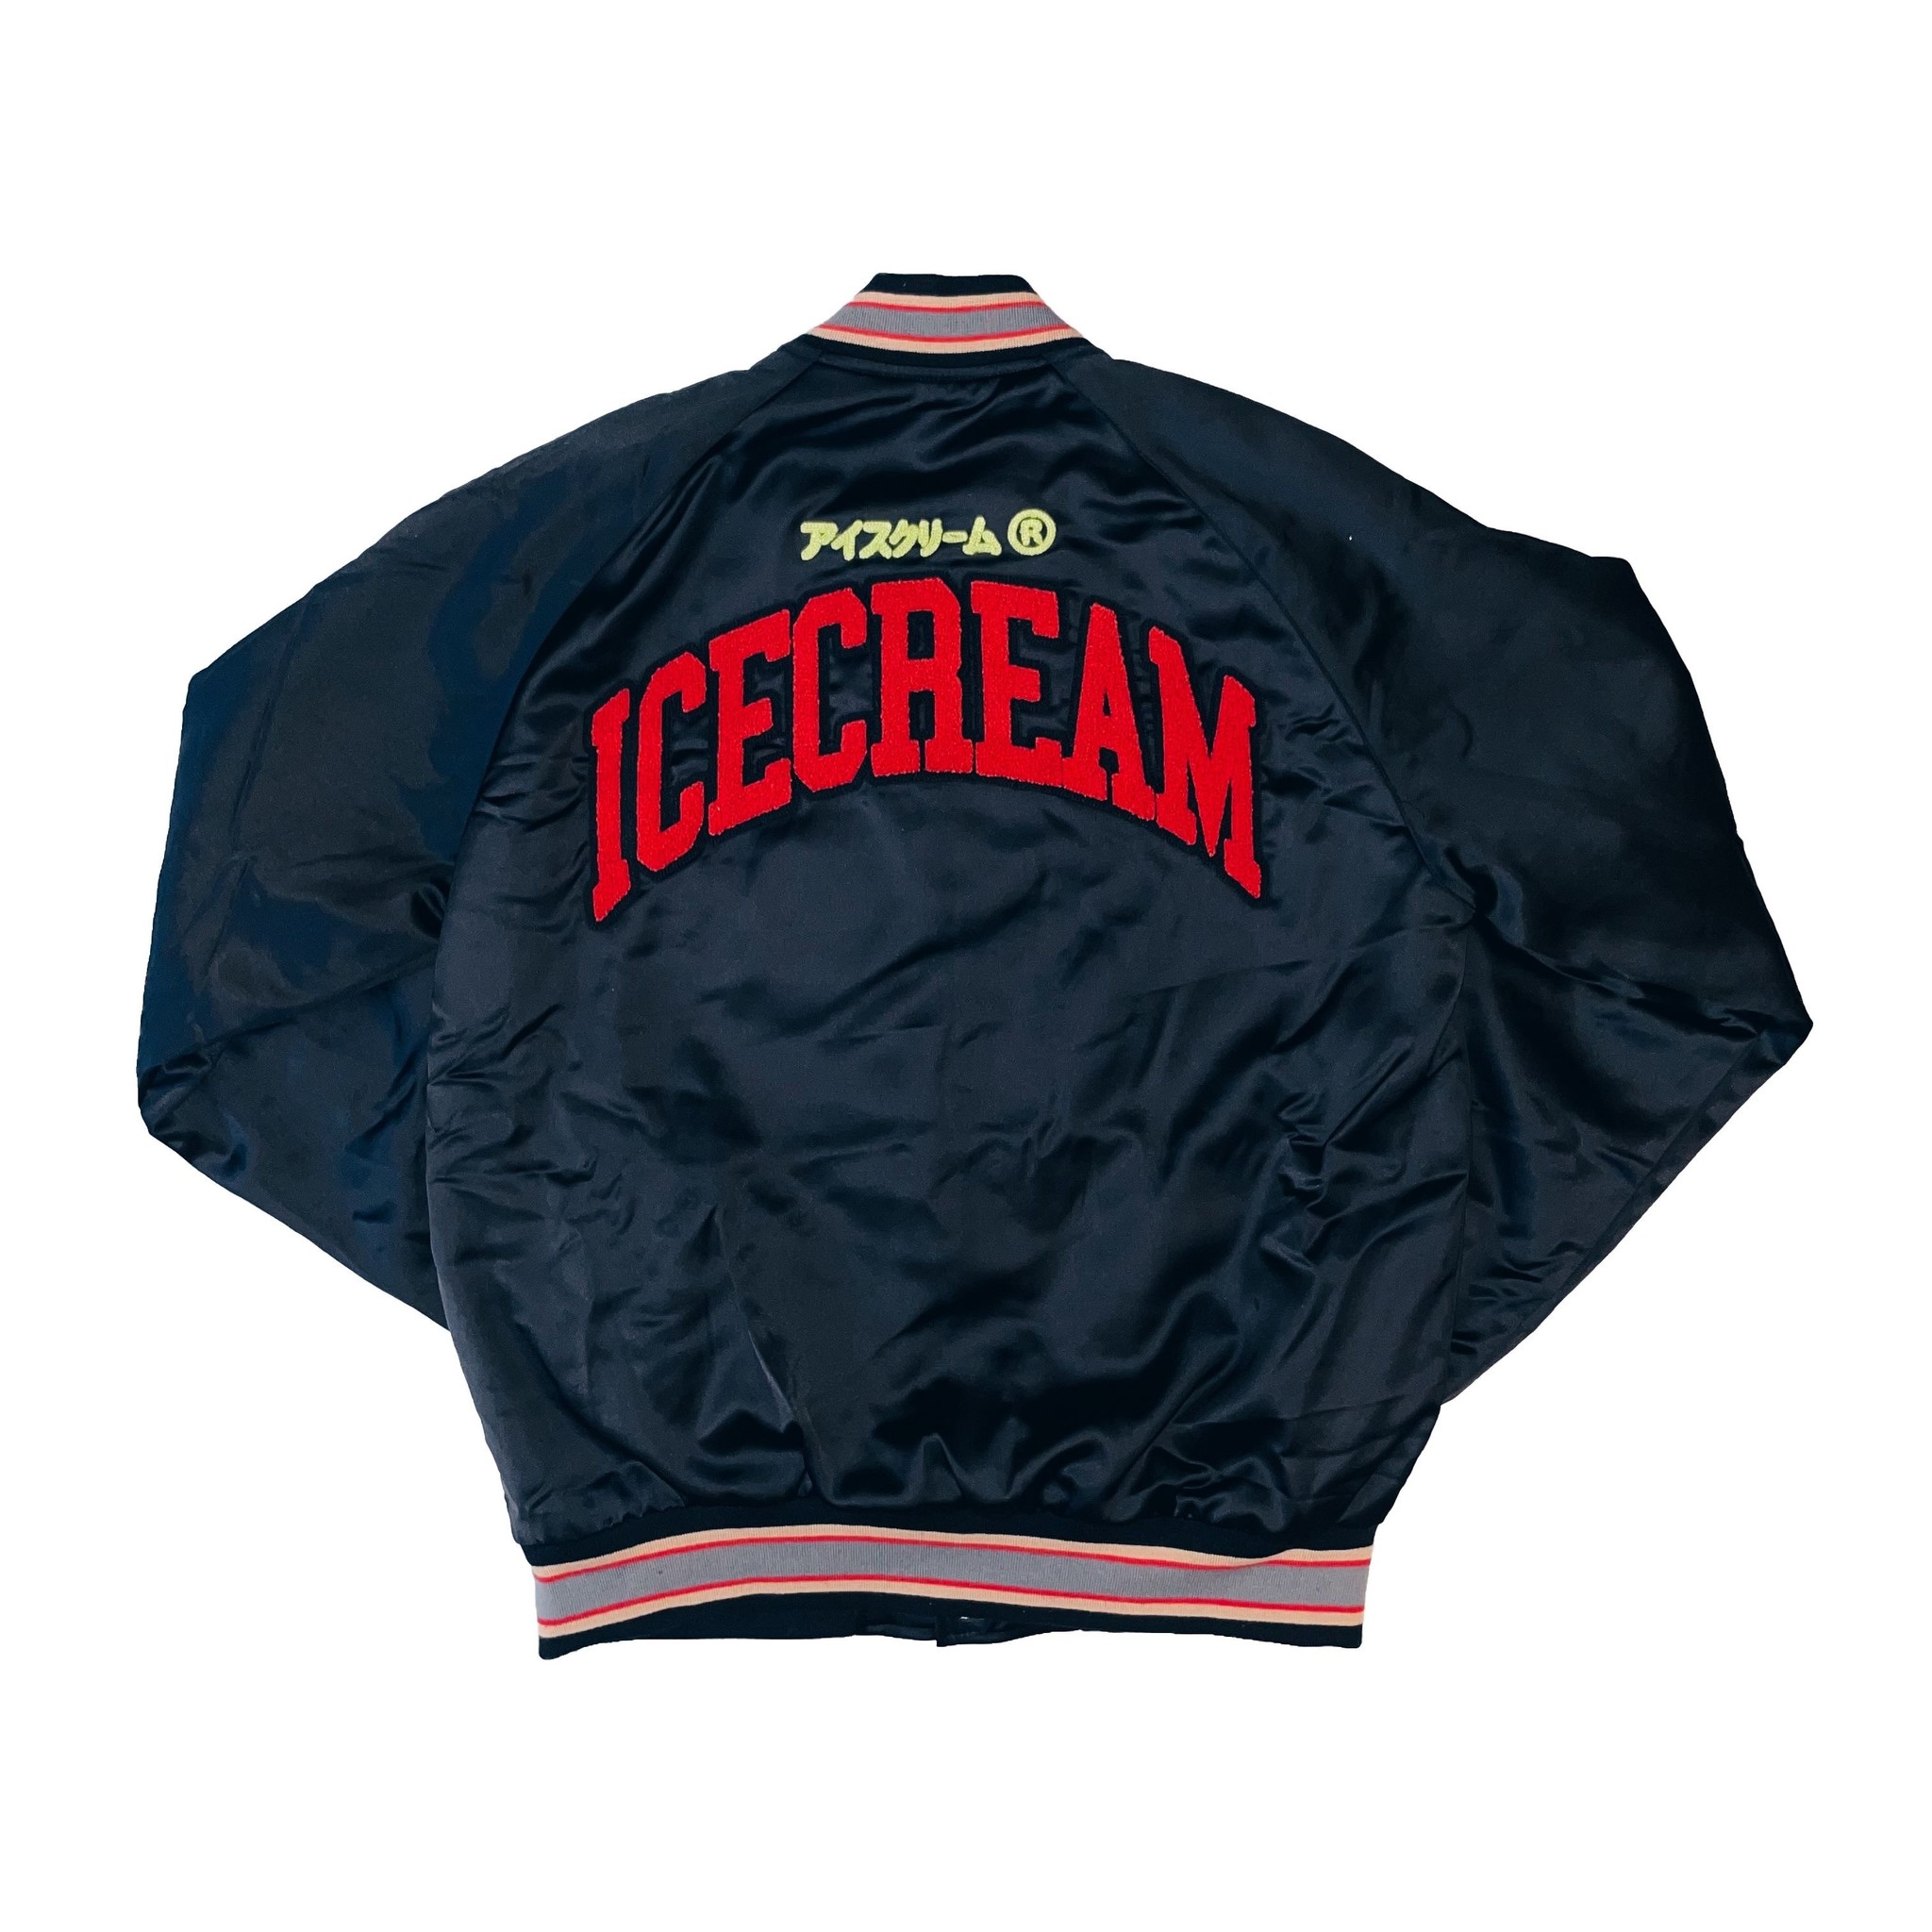 Memorial Sale 50% OFF (no code needed) Icecream College Jacket Black